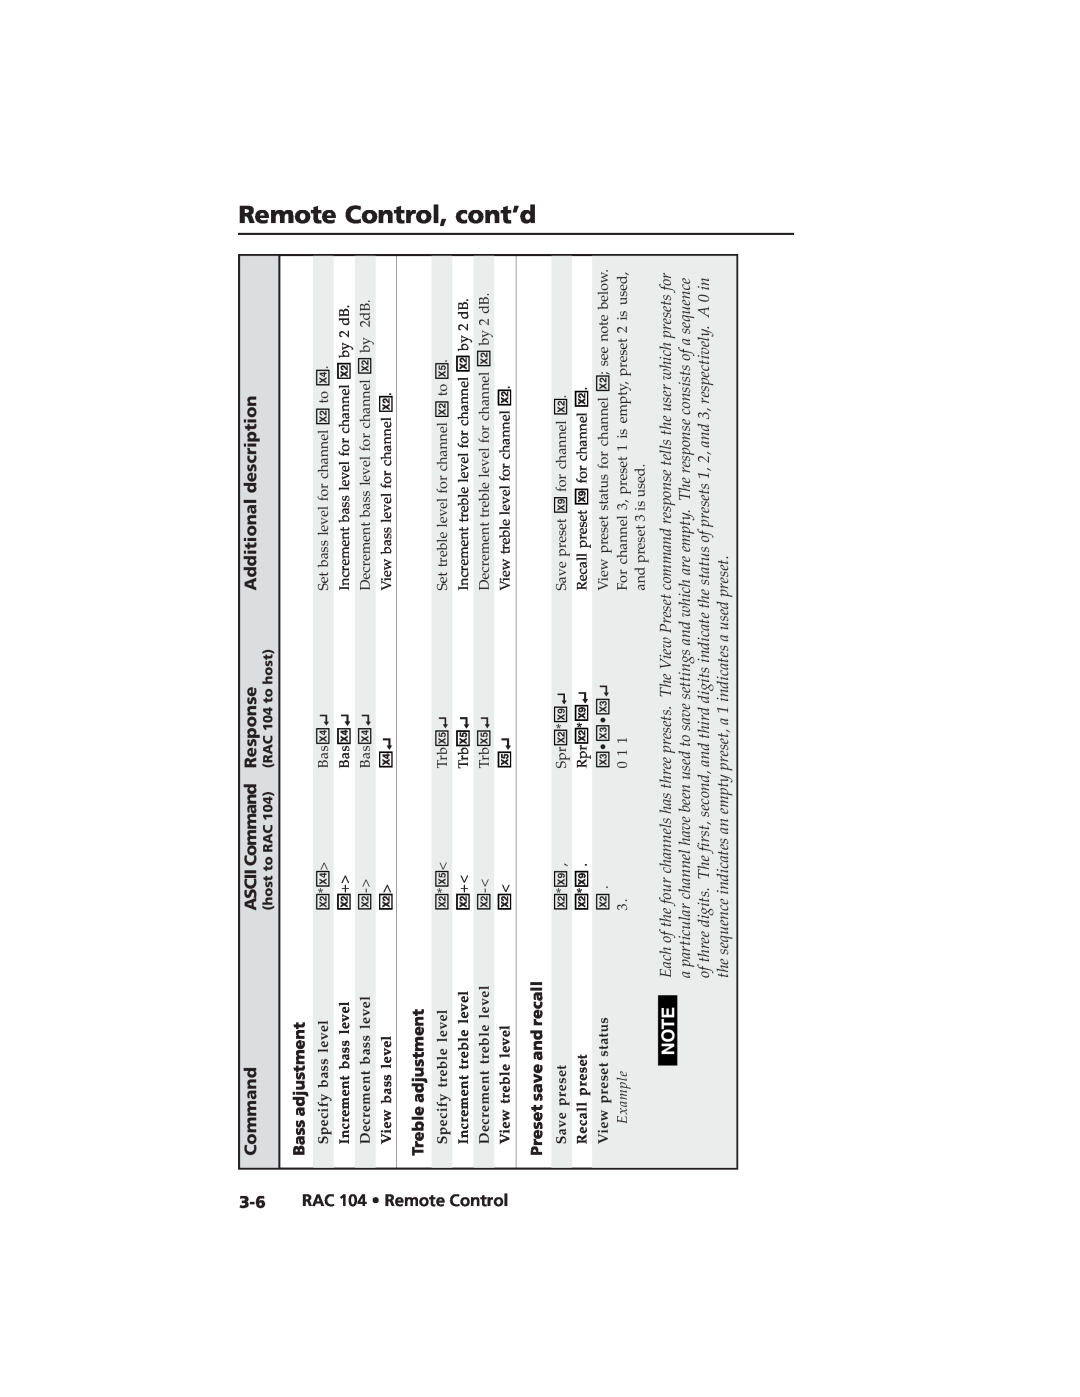 Extron electronic RAC 104 Remote, Rac, Control, cont’d, ASCII Command, Response, Additional description, Save preset 